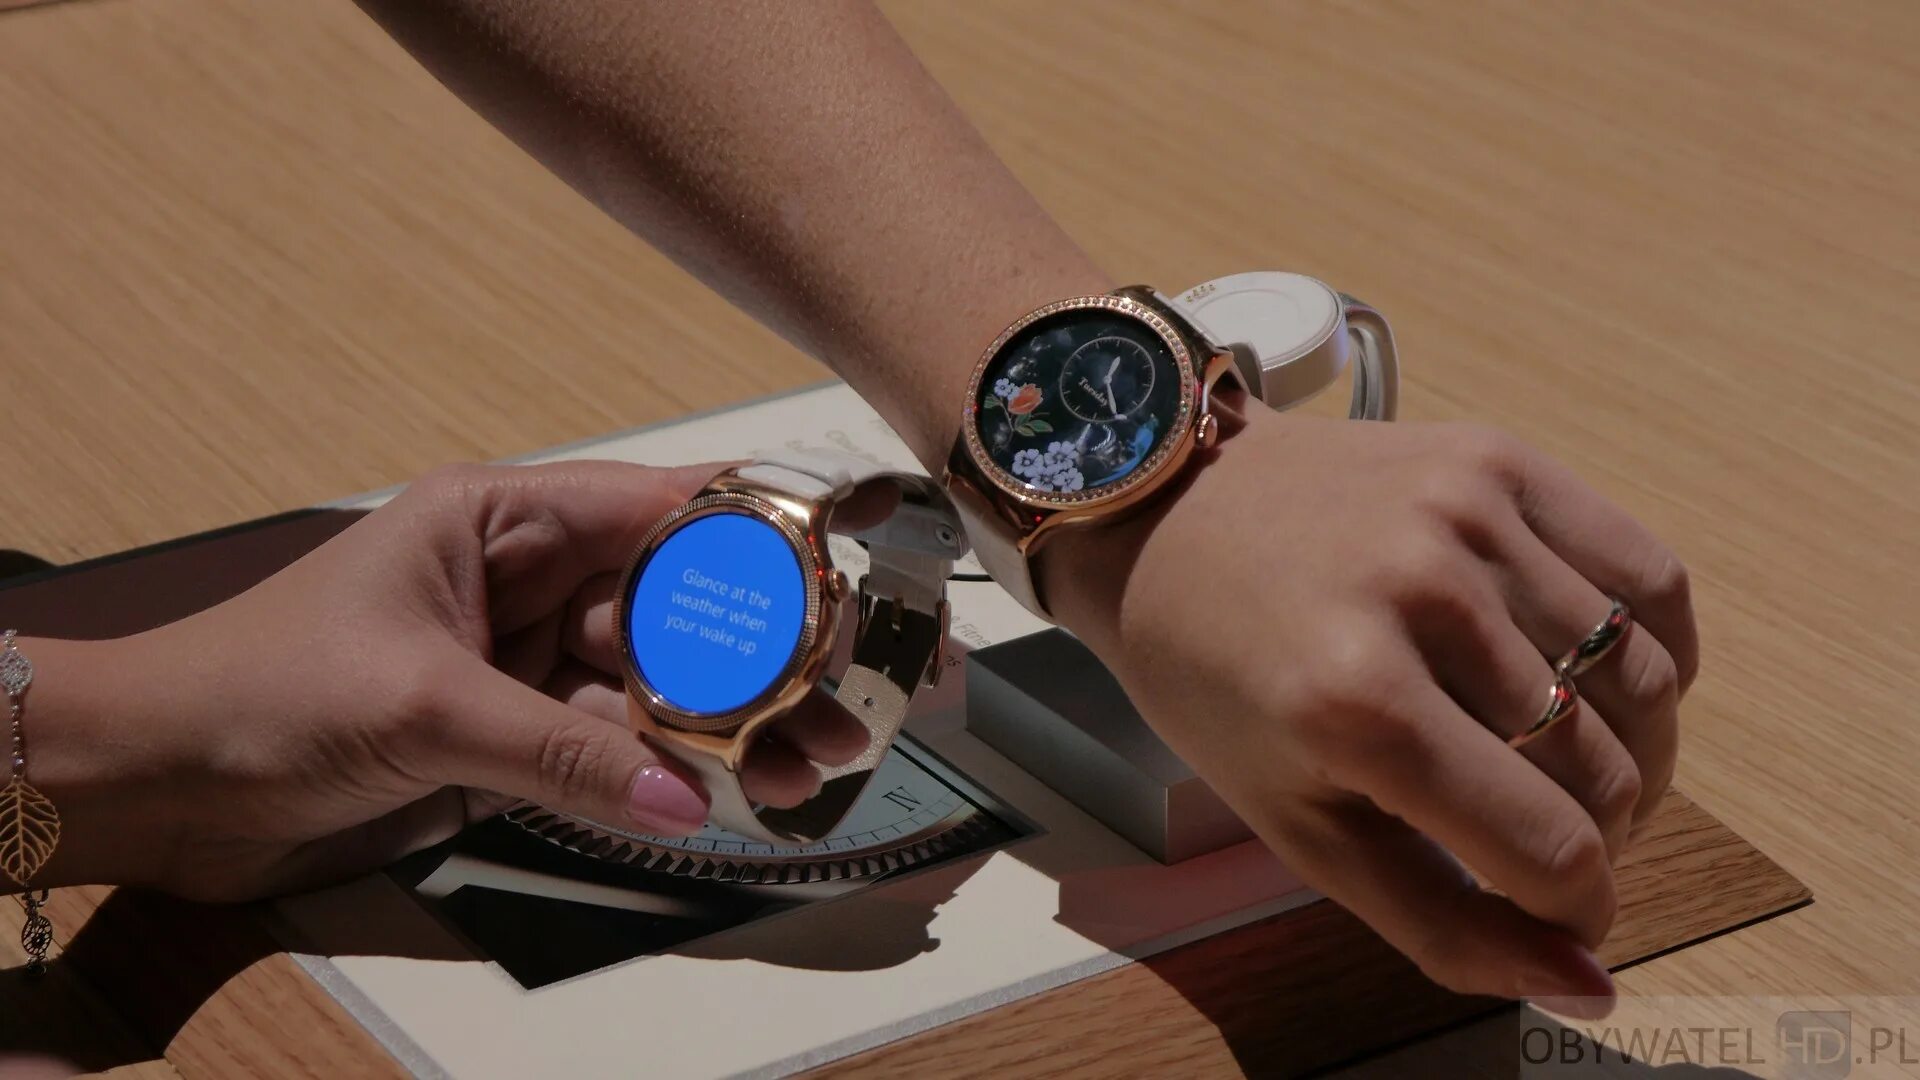 Huawei watch Elegant. Huawei watch Jewel. Смарт часы Хуавей Элегант. Huawei watch Fit белый. Часы huawei розовые